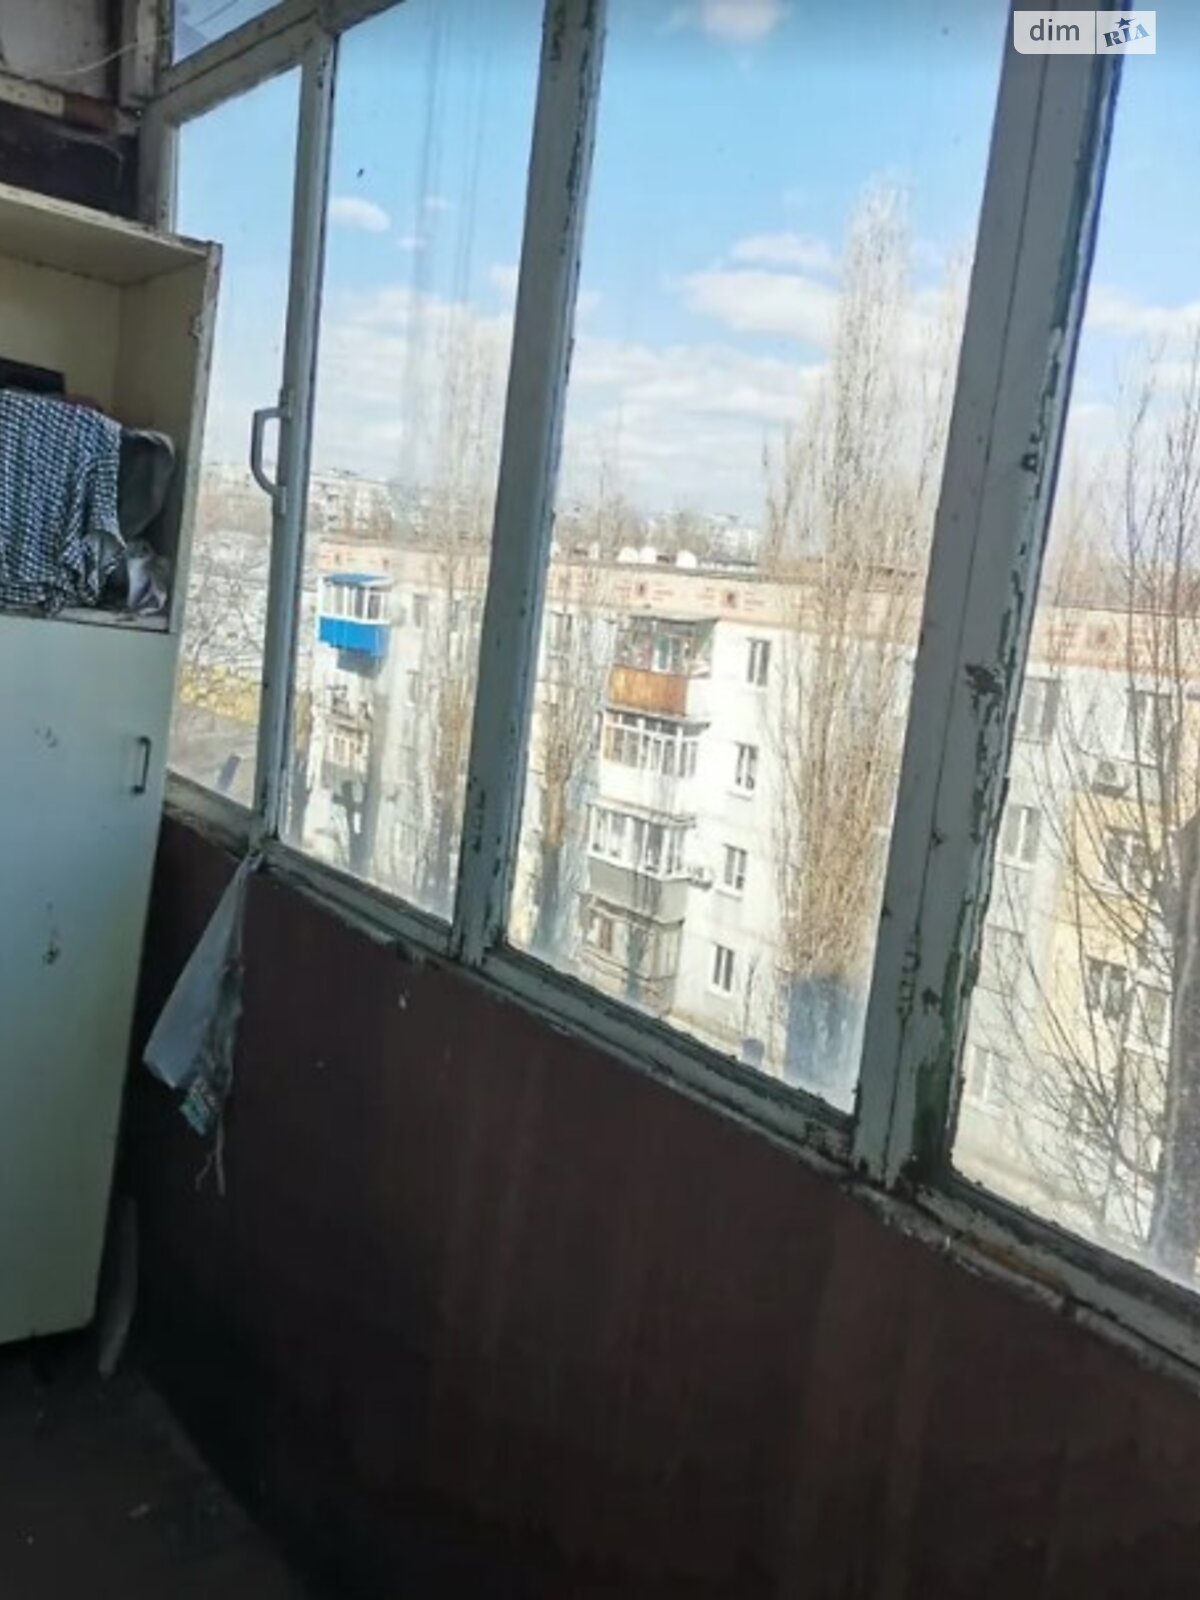 Продажа двухкомнатной квартиры в Днепре, на ул. Казакевича 6, район 12 квартал фото 1